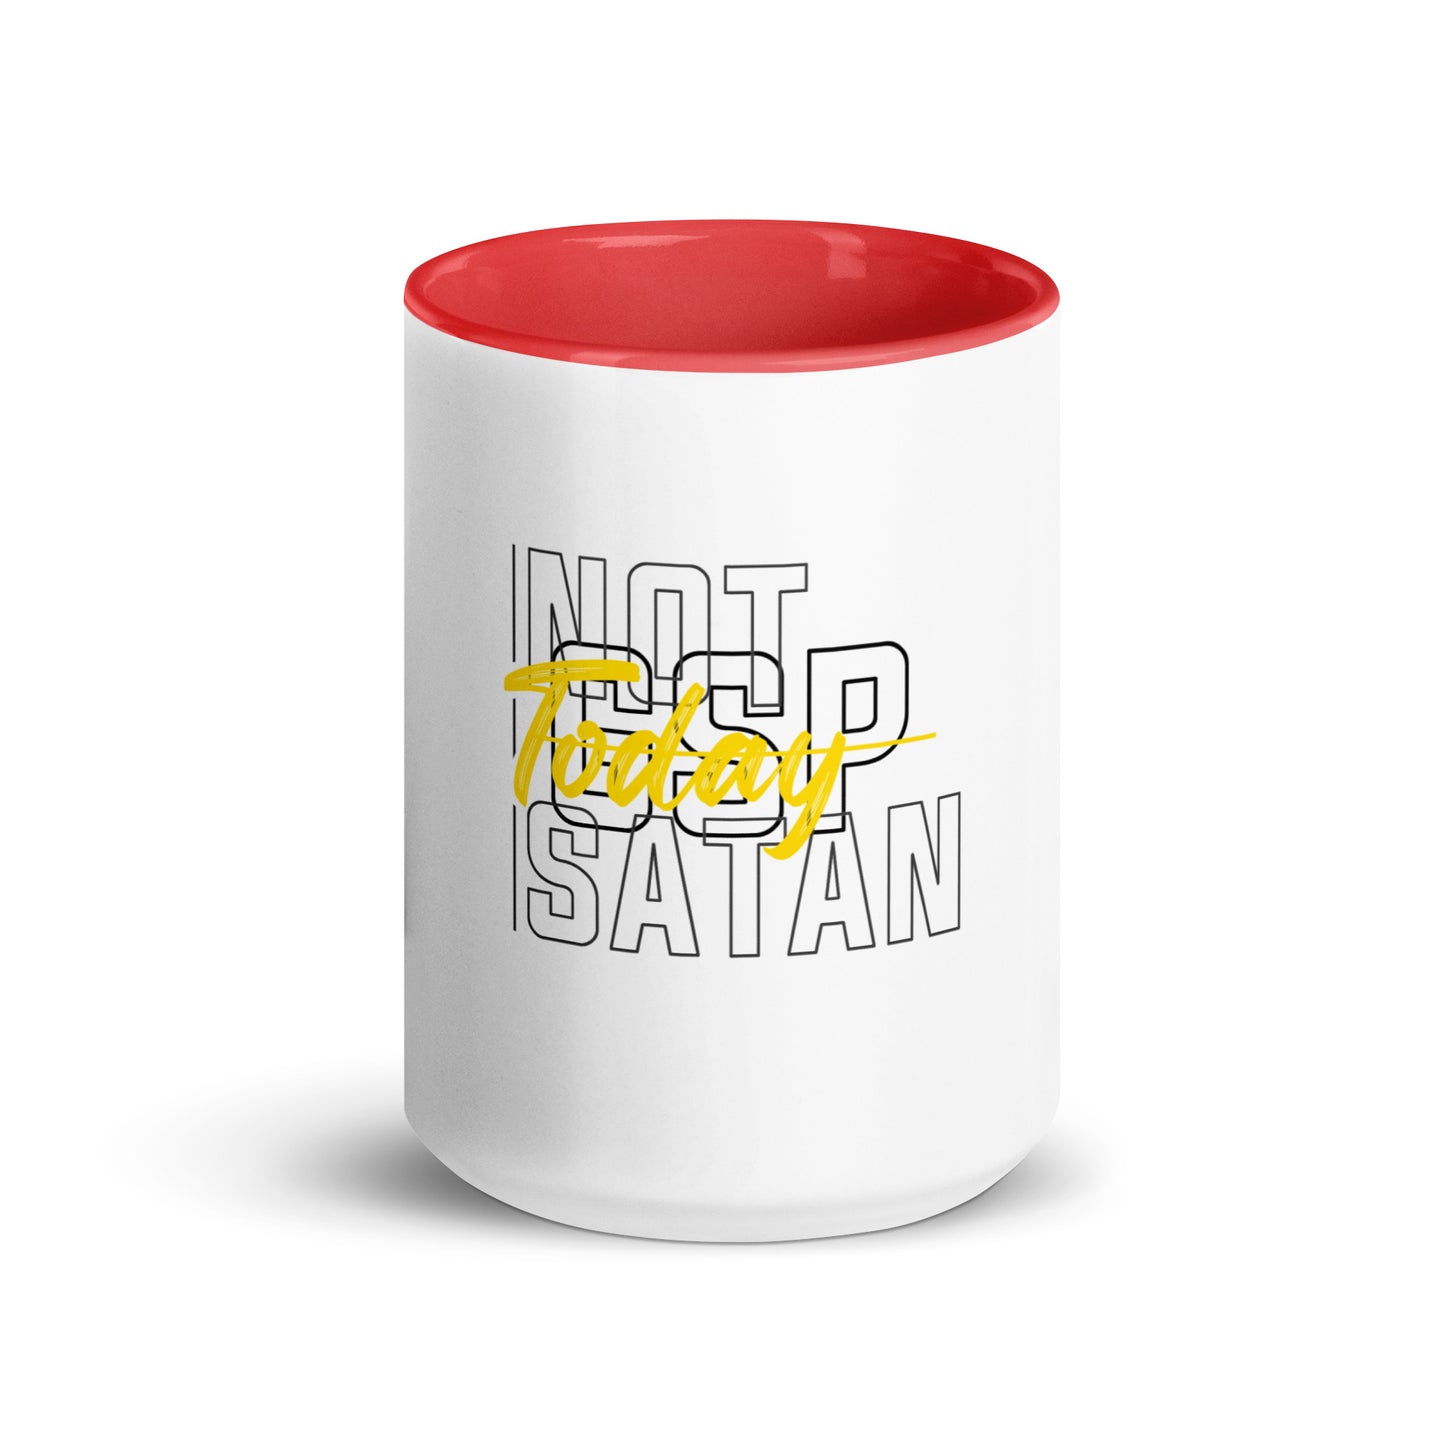 Not Today Satan - Coloured Mug